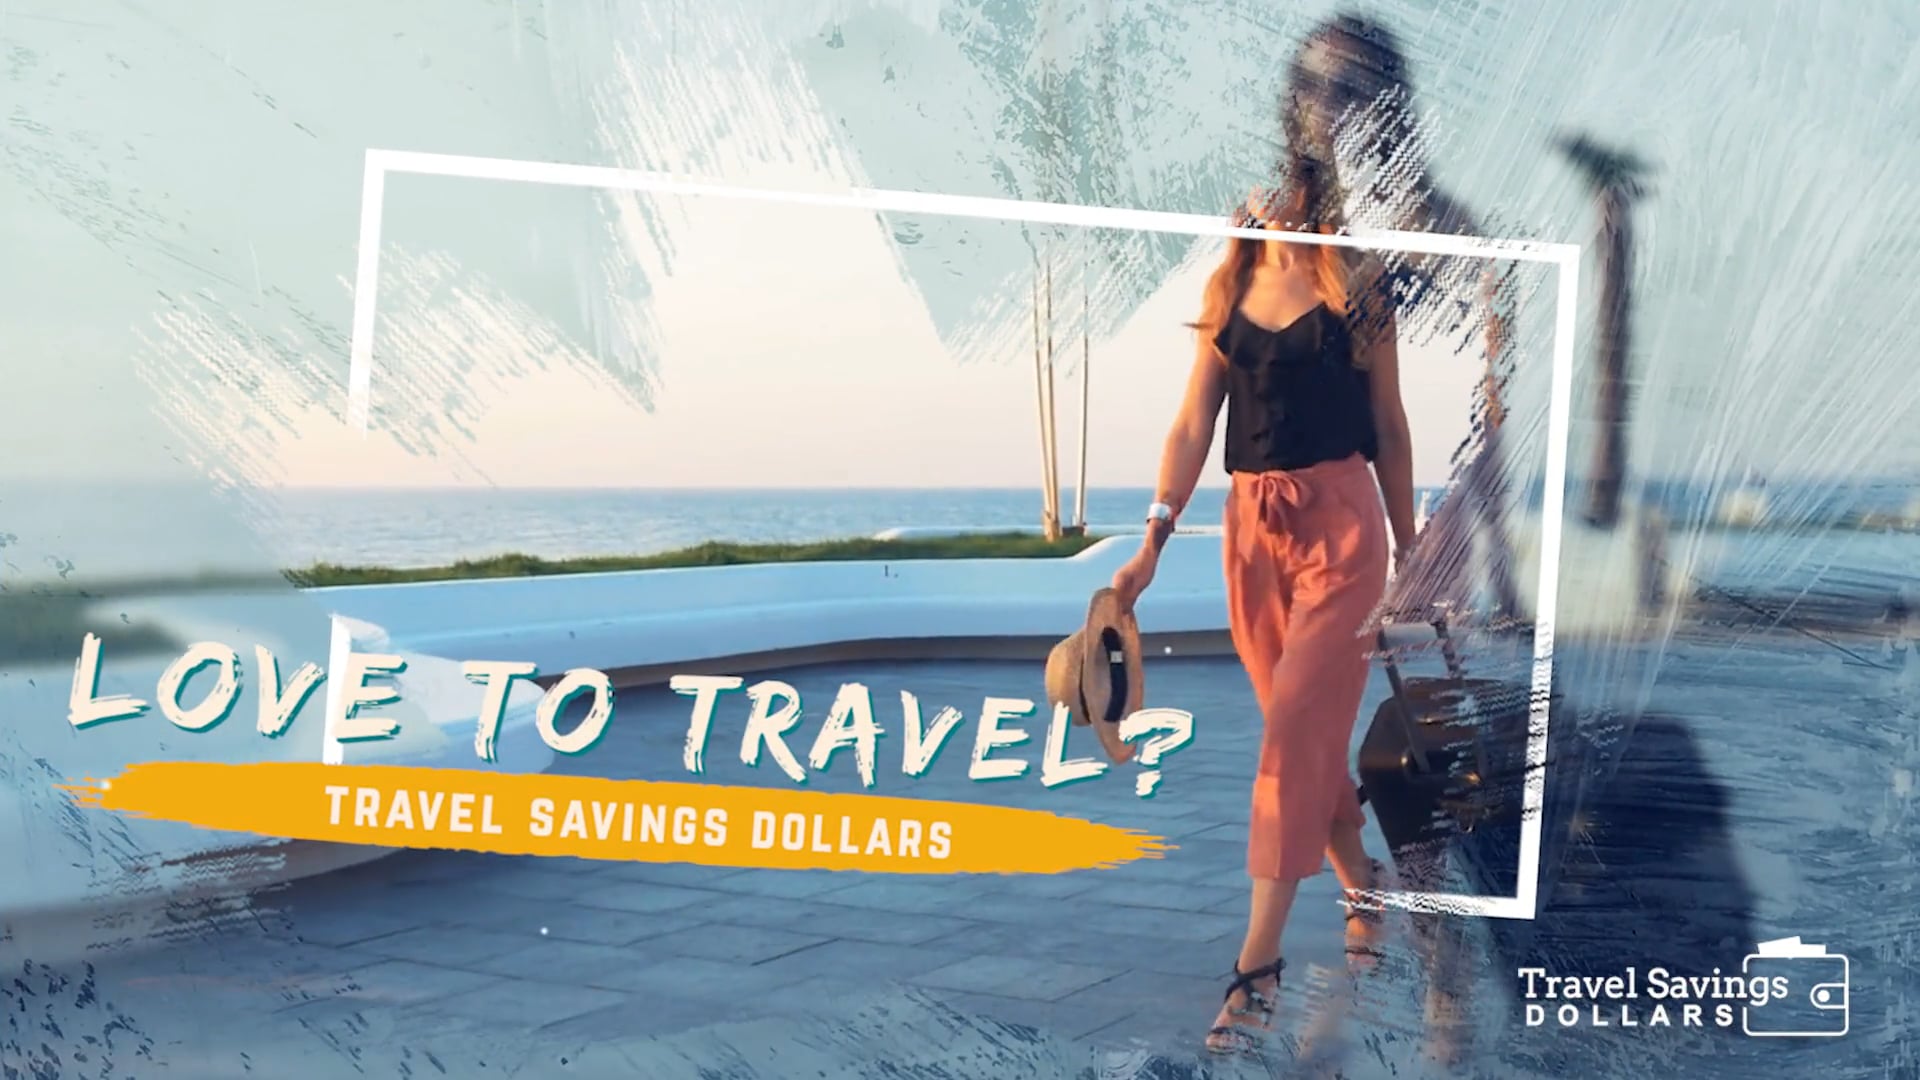 Travel Savings Dollars